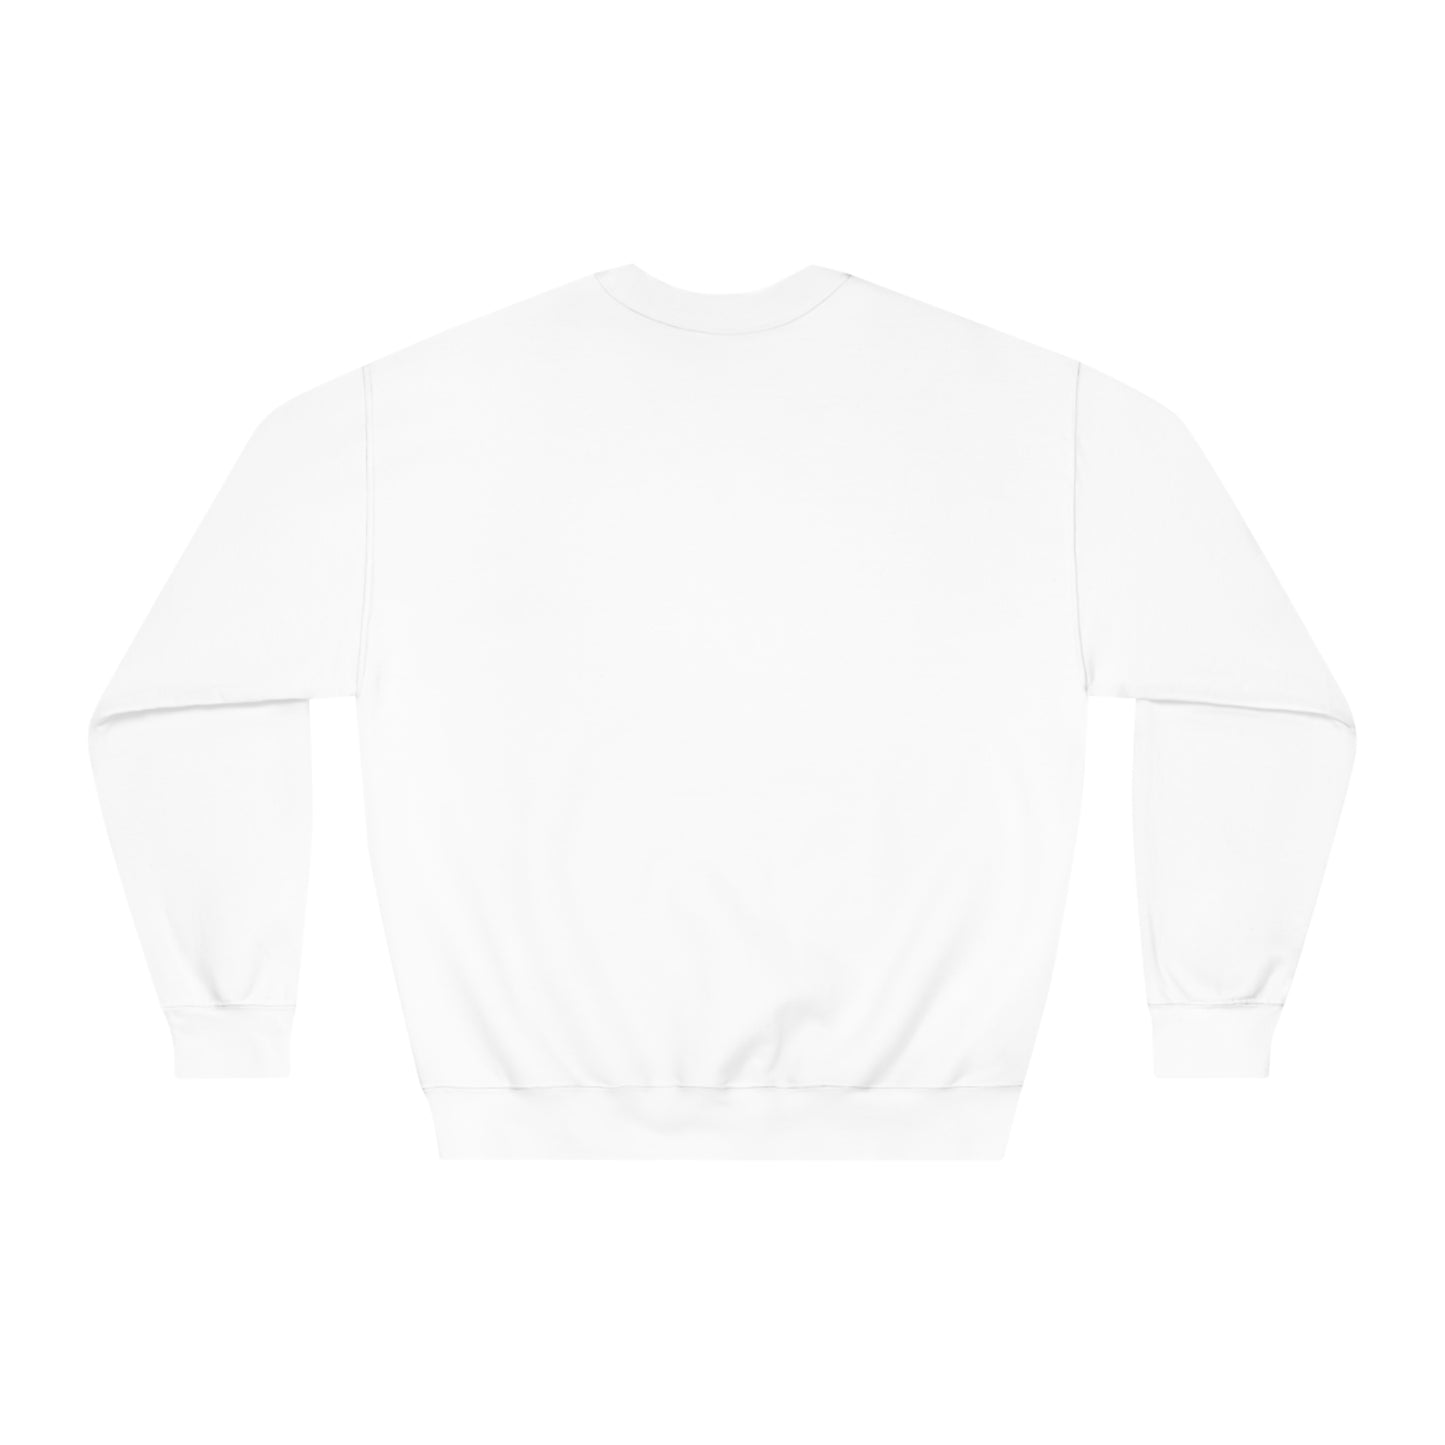 Perfectly Imperfect - Unisex DryBlend® Crewneck Sweatshirt